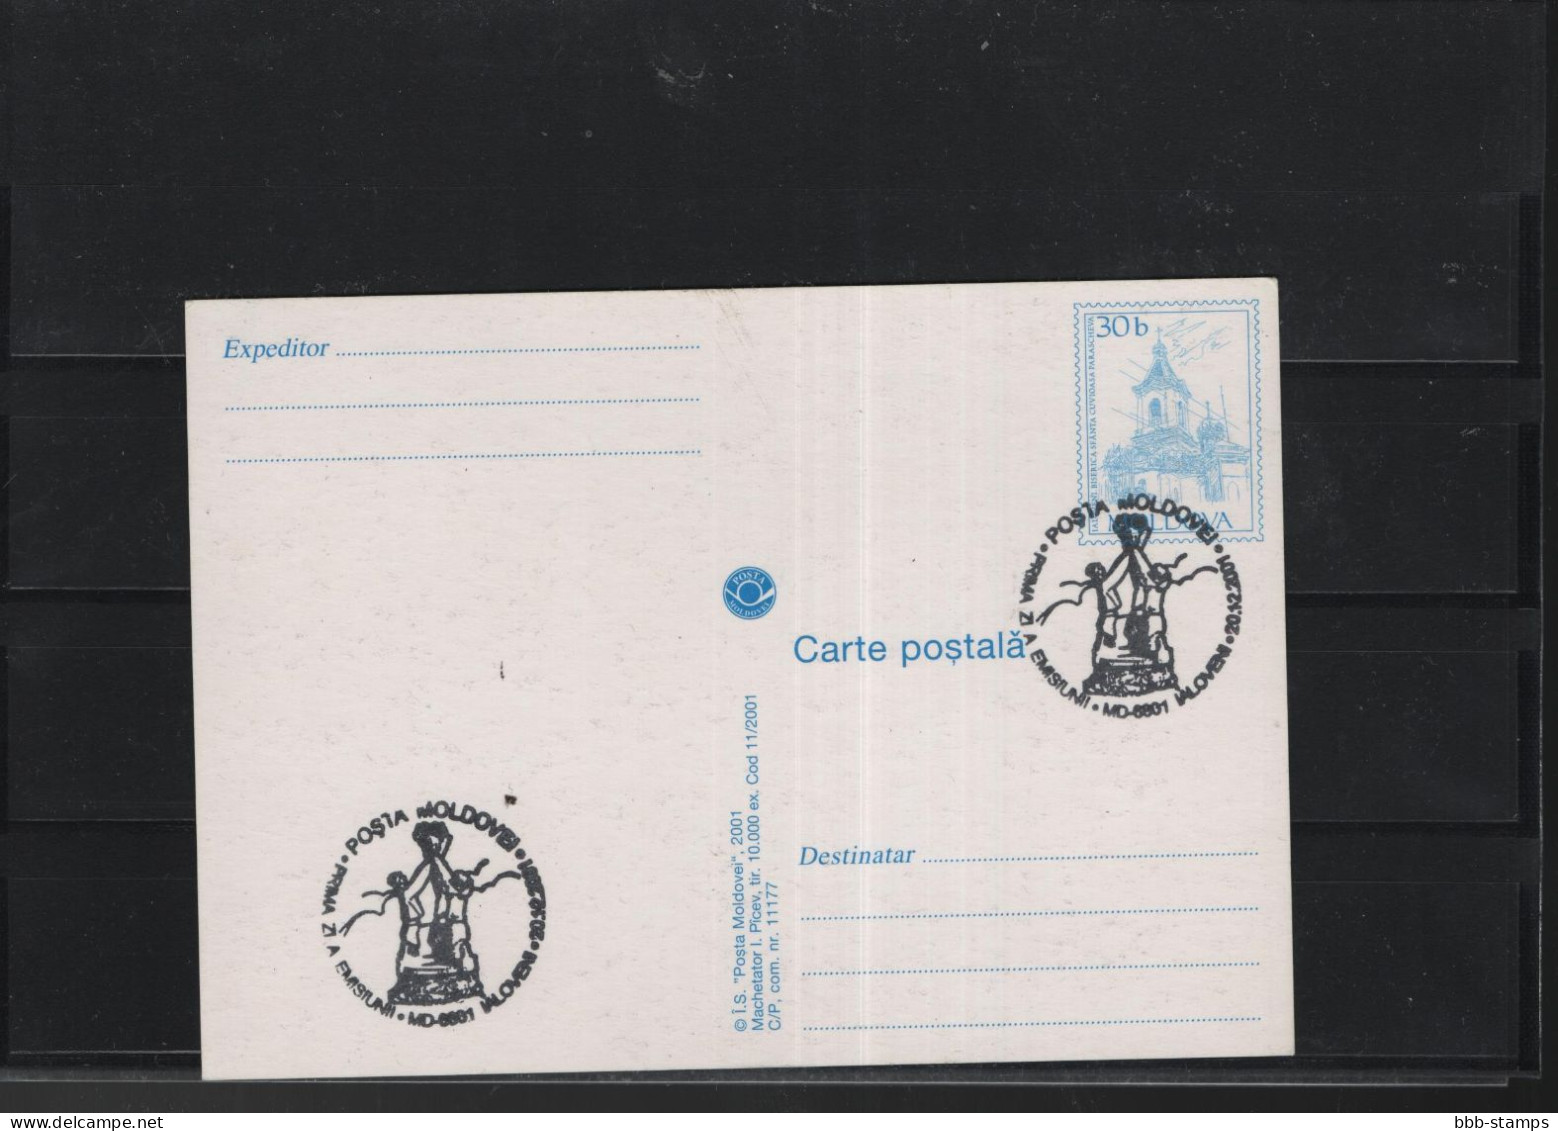 Moldavien Michel Cat.No. Postal Stat  Card Issued  20.12.2001 - Moldavia